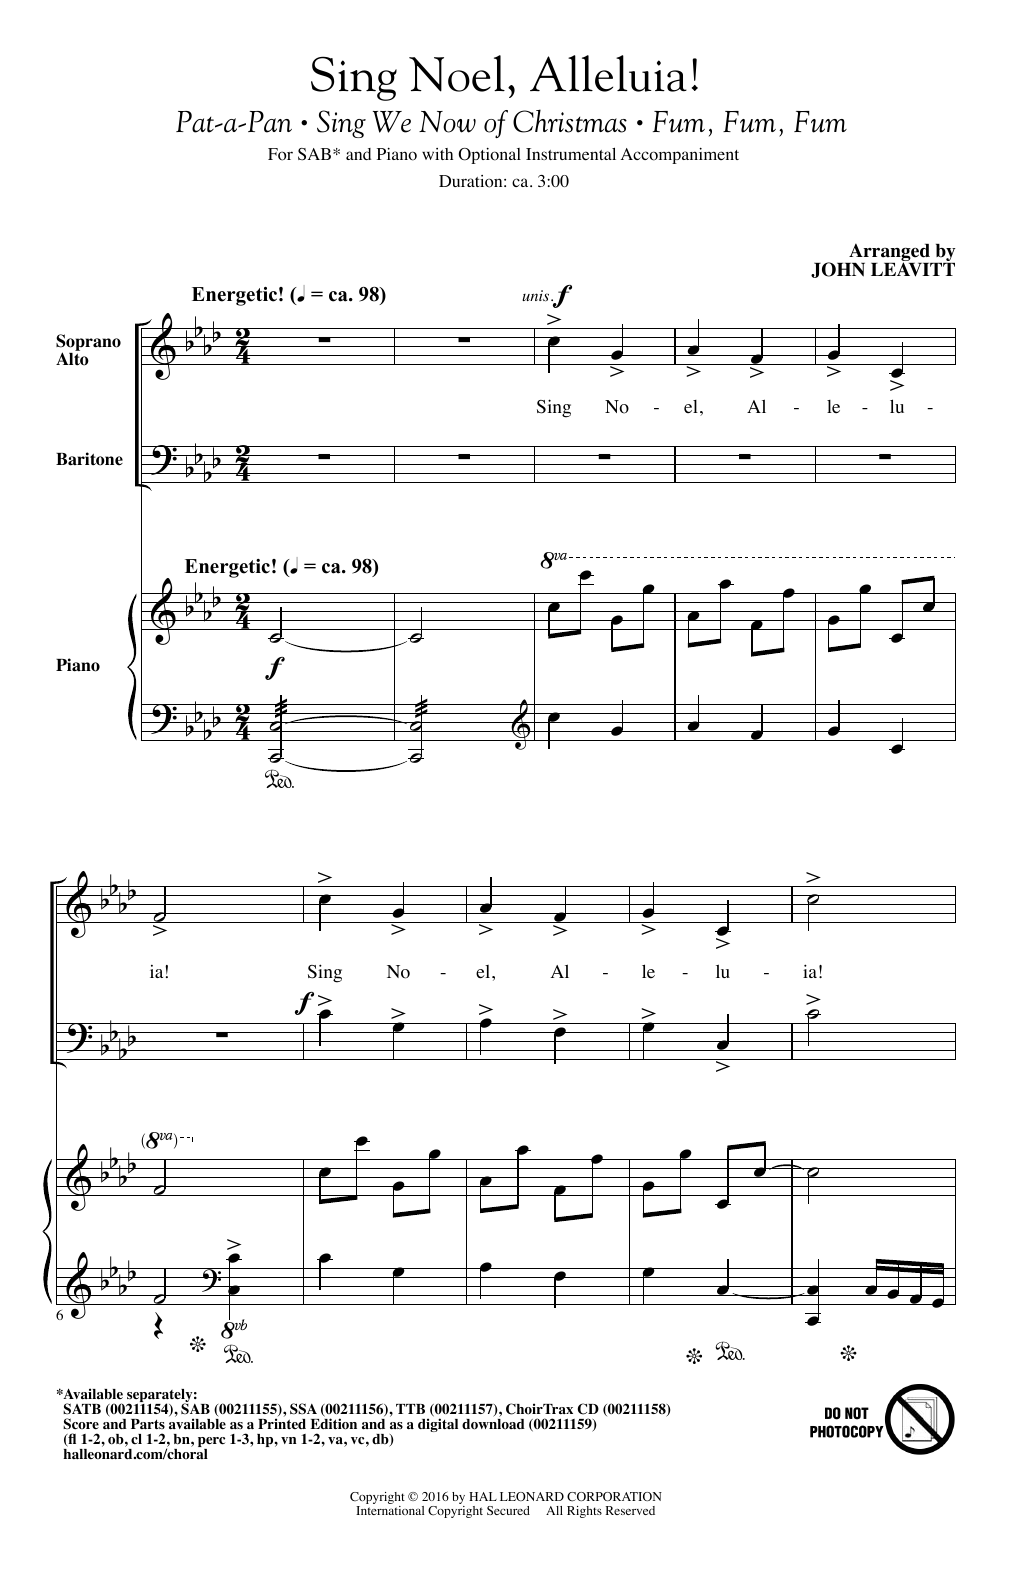 Download John Leavitt Sing Noel, Alleluia! Sheet Music and learn how to play SATB PDF digital score in minutes